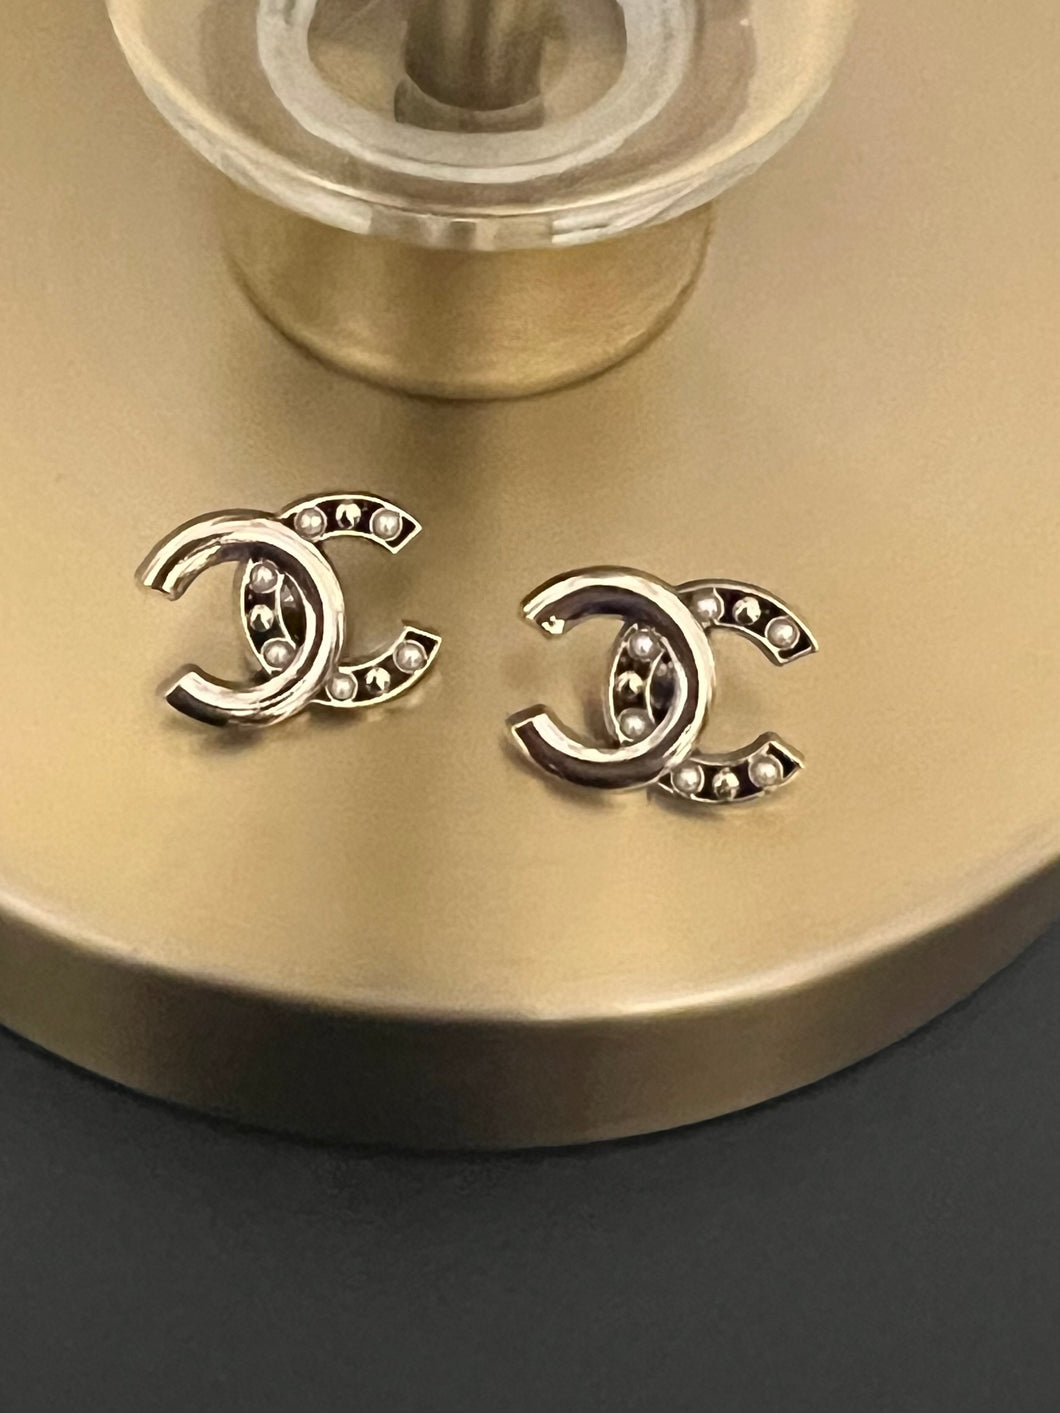 Repurposed Silver C Button Earrings